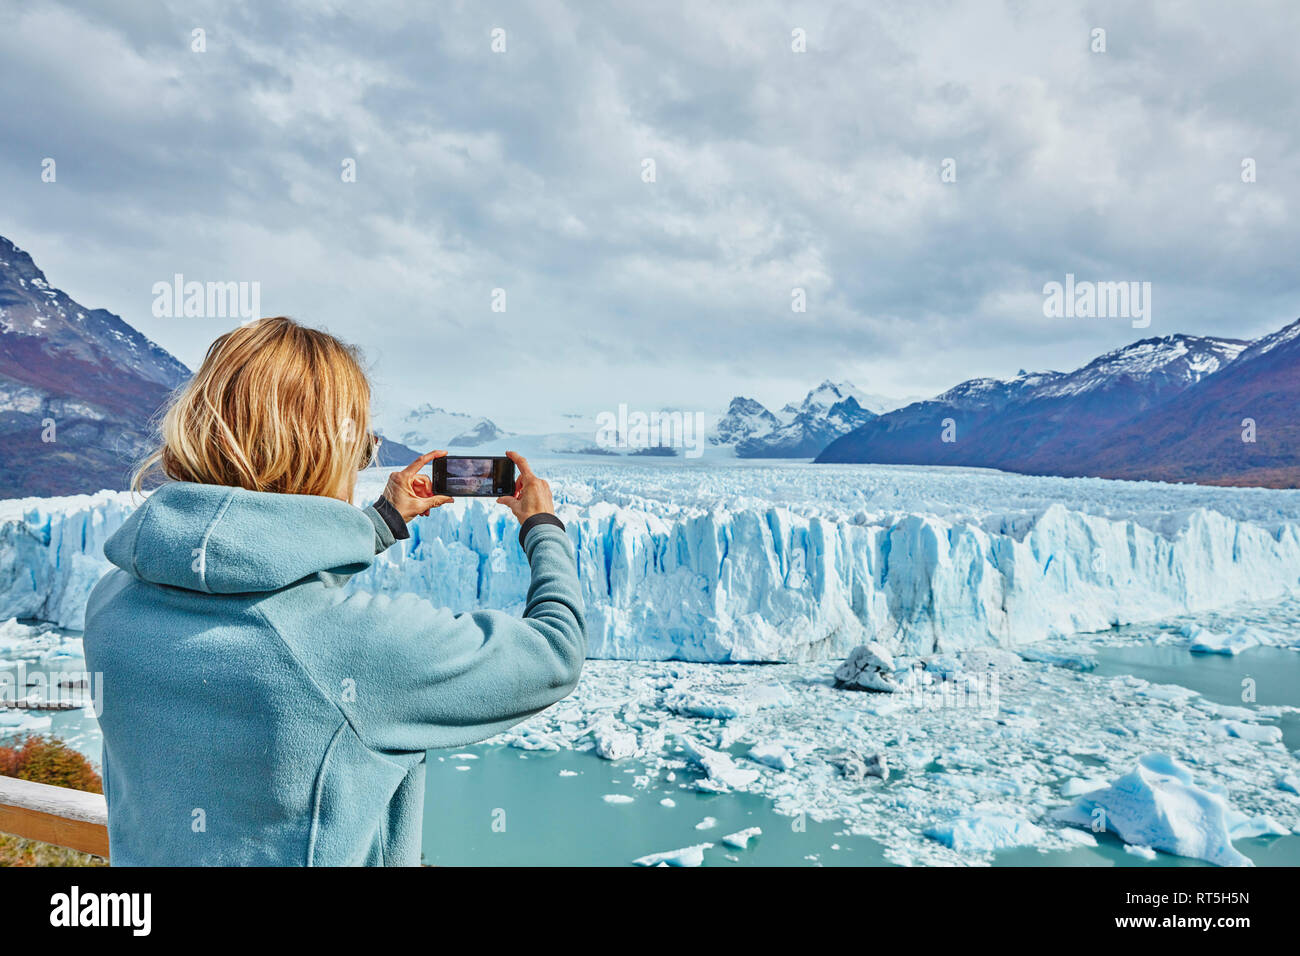 L'Argentine, Patagonie, Perito Moreno Glacier, woman taking cell phone Photo de glacier Banque D'Images